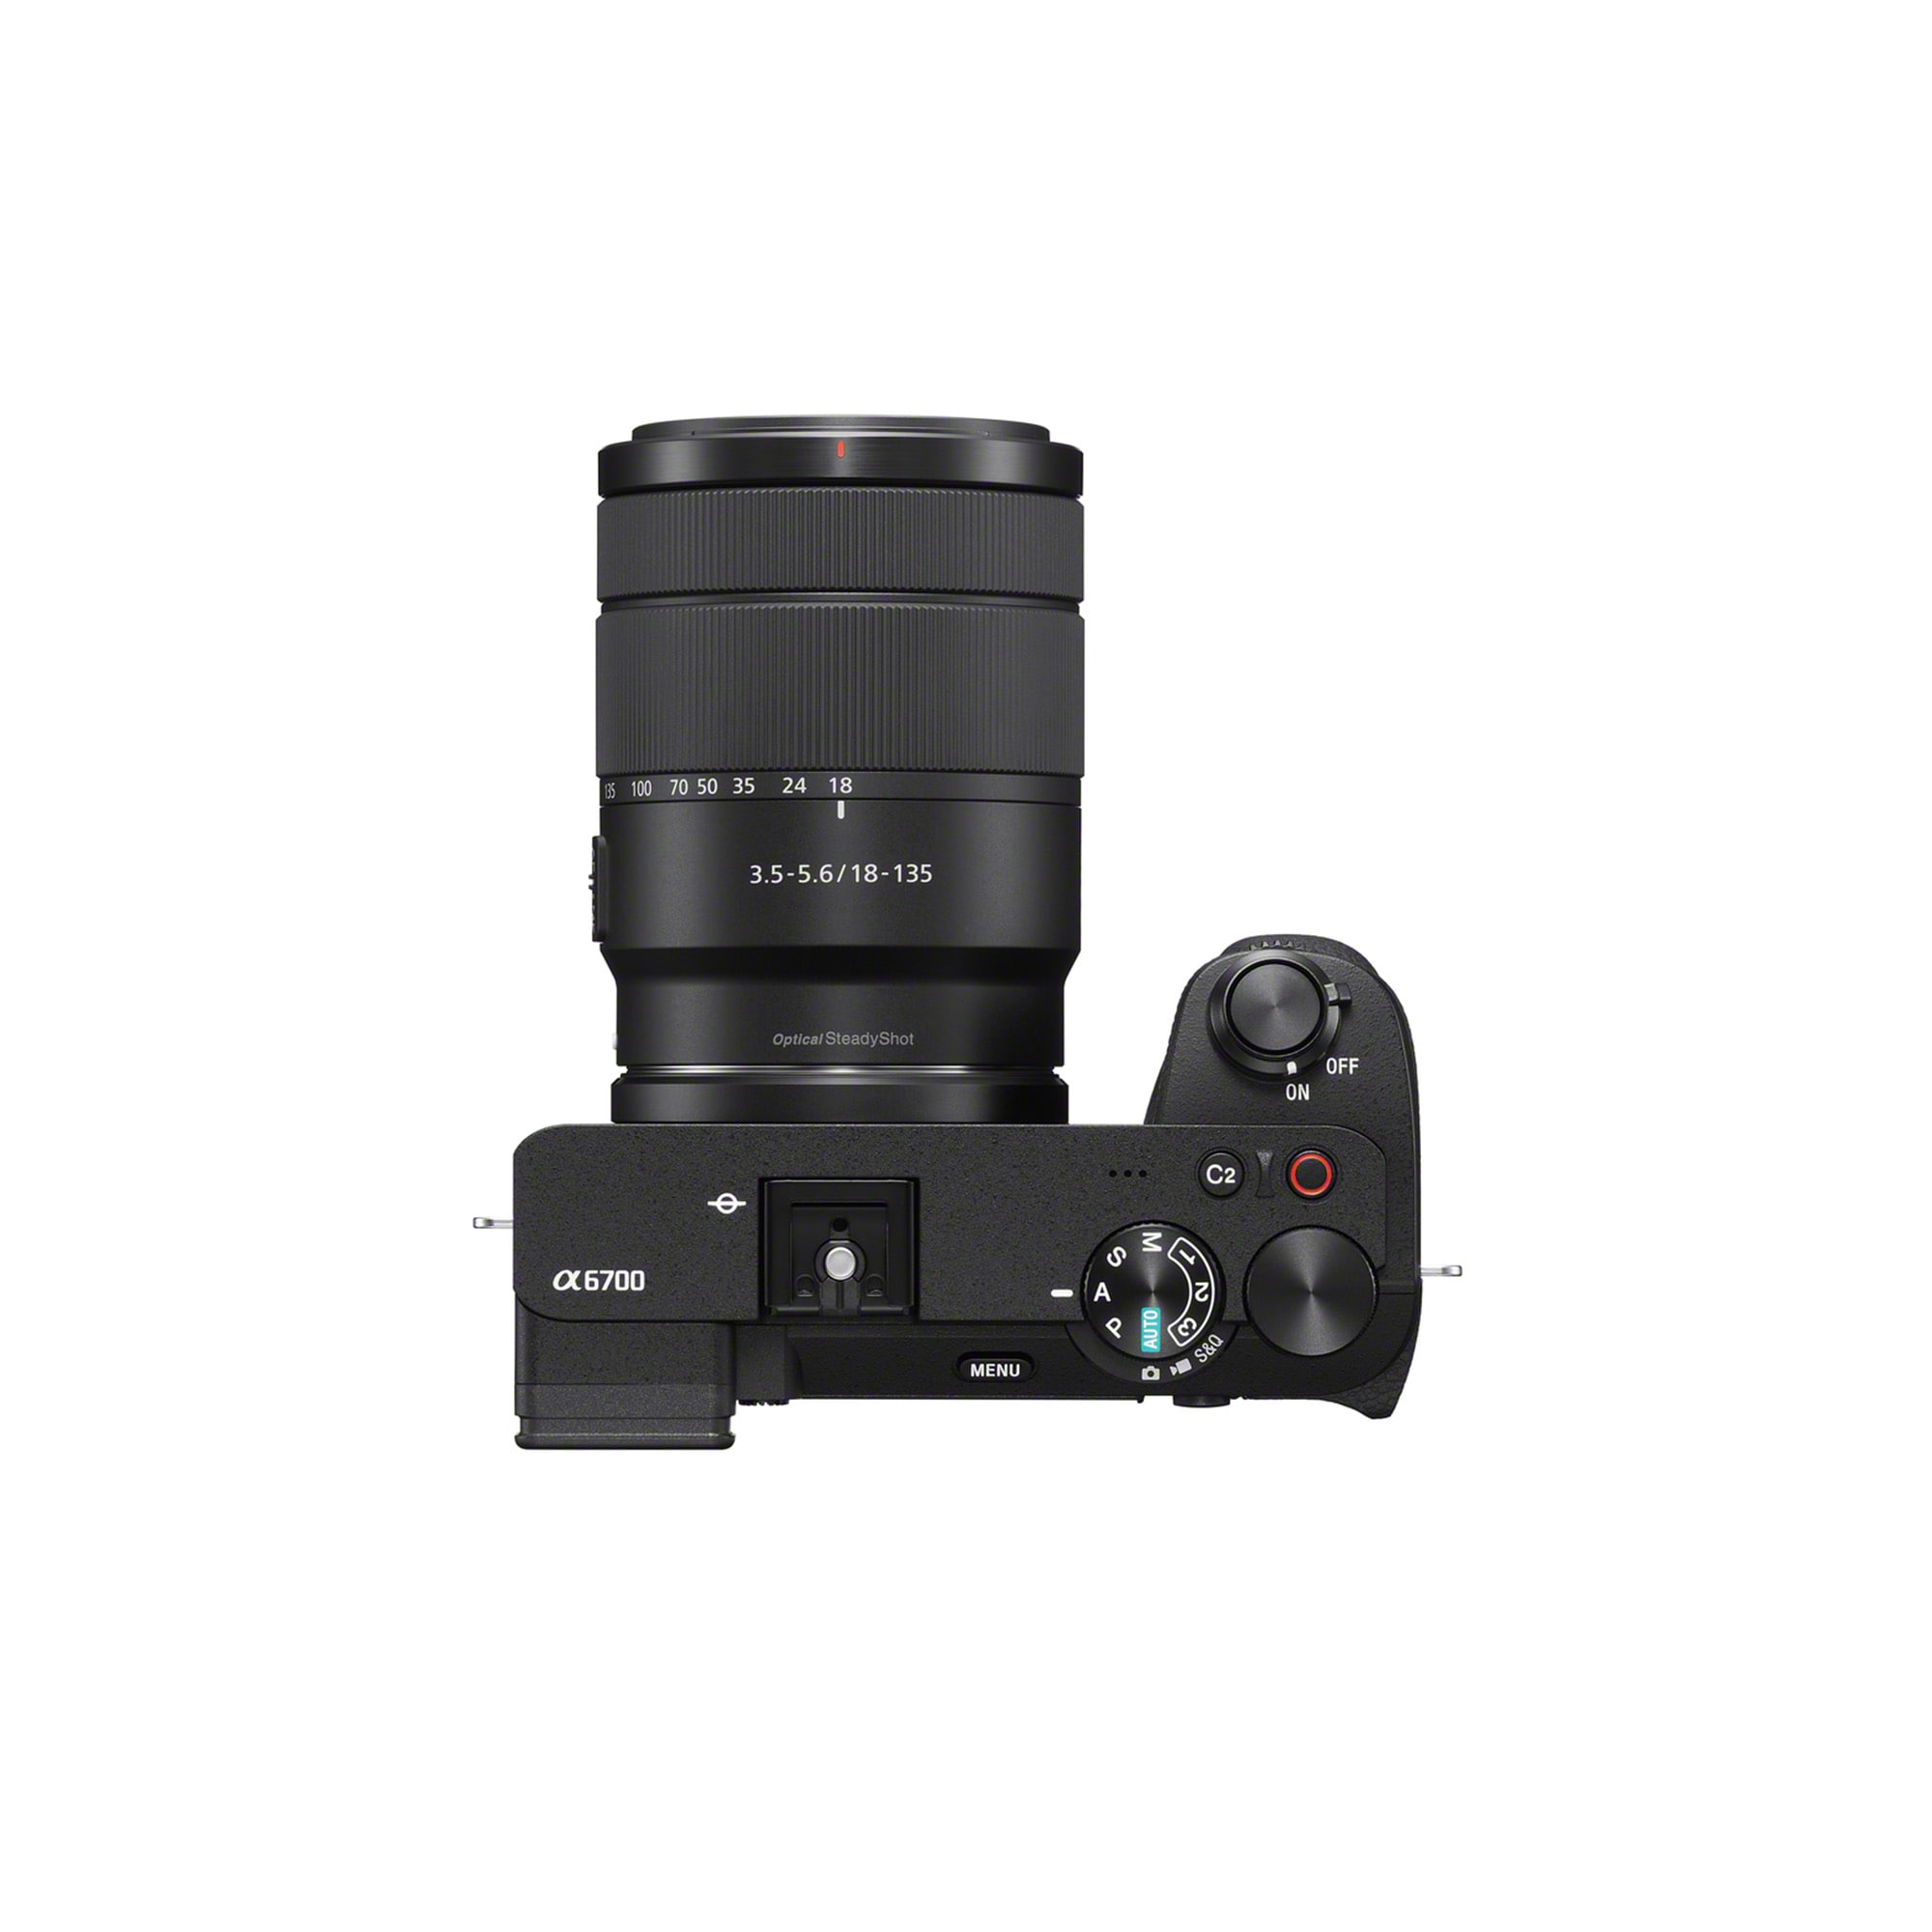 Sony A6700 + 18-135mm f/3,5-5,6 OSS